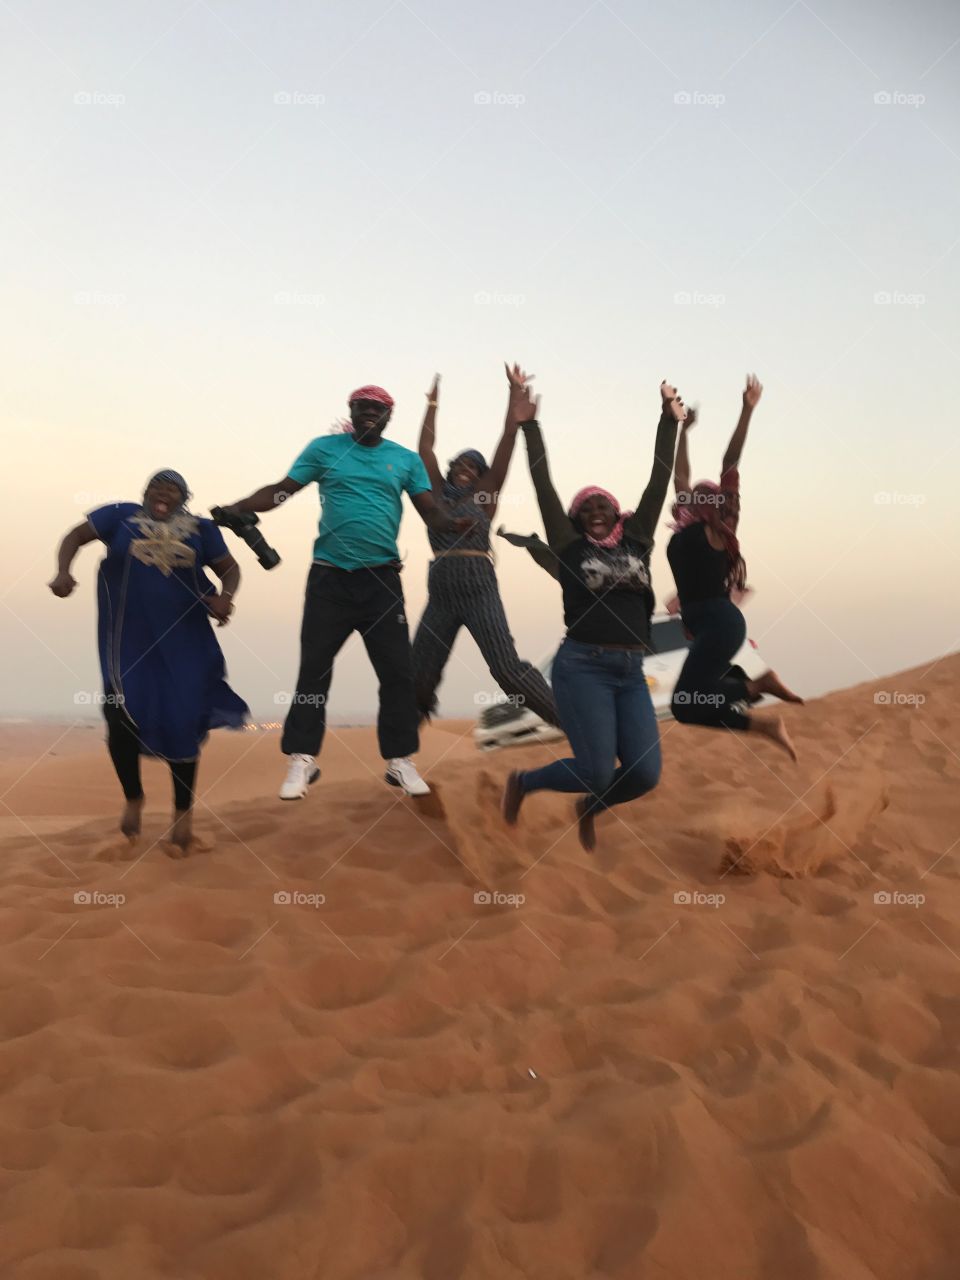 Jumping for joy in the Al Madam desert safari sand, Dubai £20.00